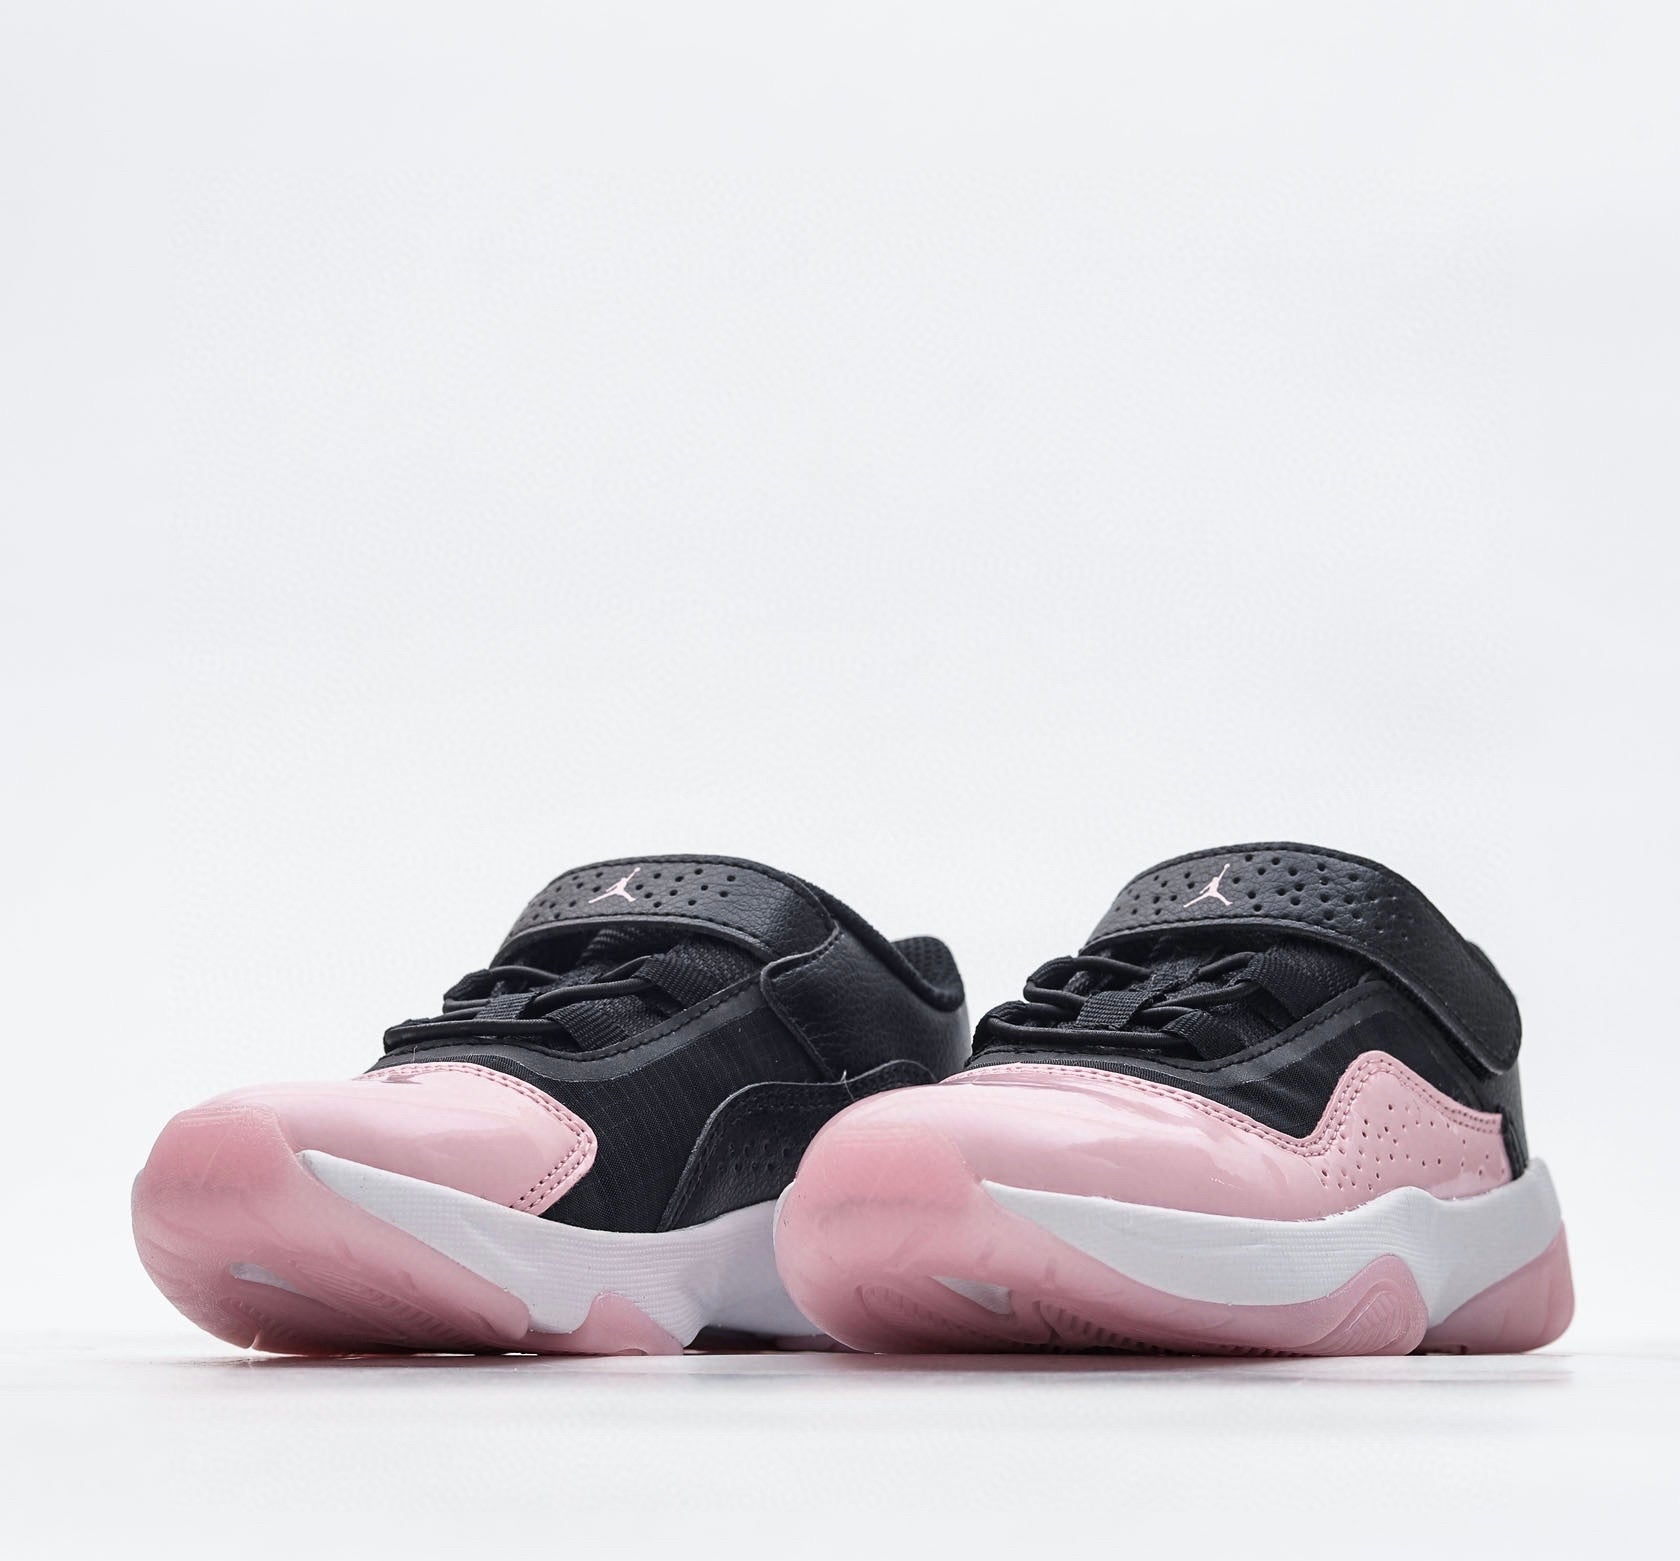 Nike air jordan retro low cut chaussures noires et roses